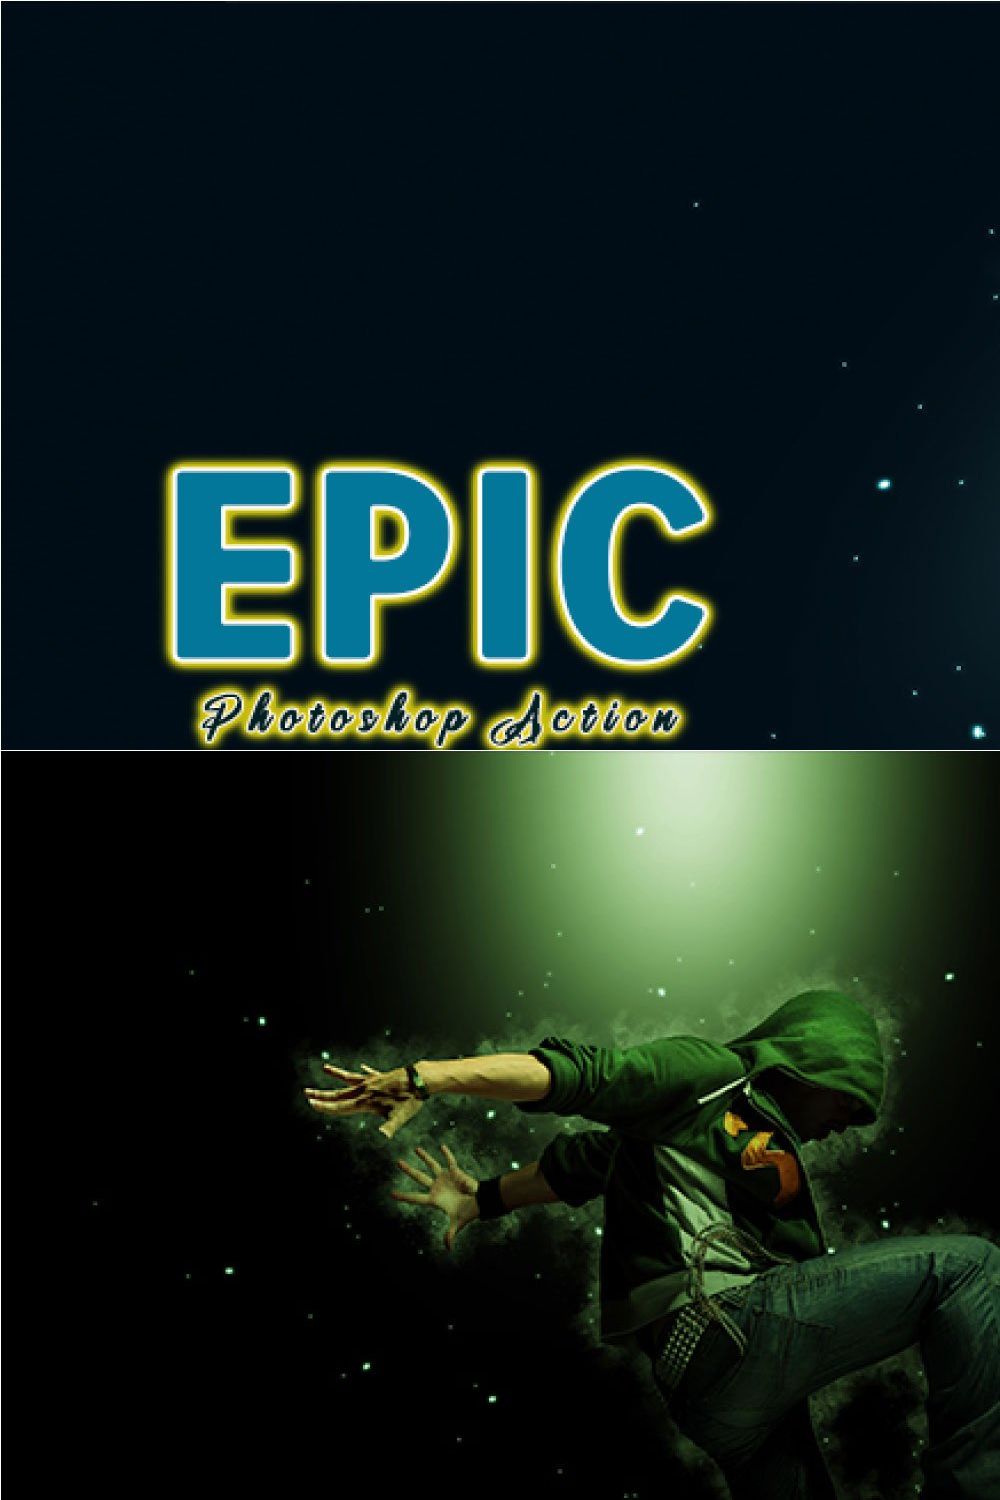 Epic Photoshop Action pinterest preview image.